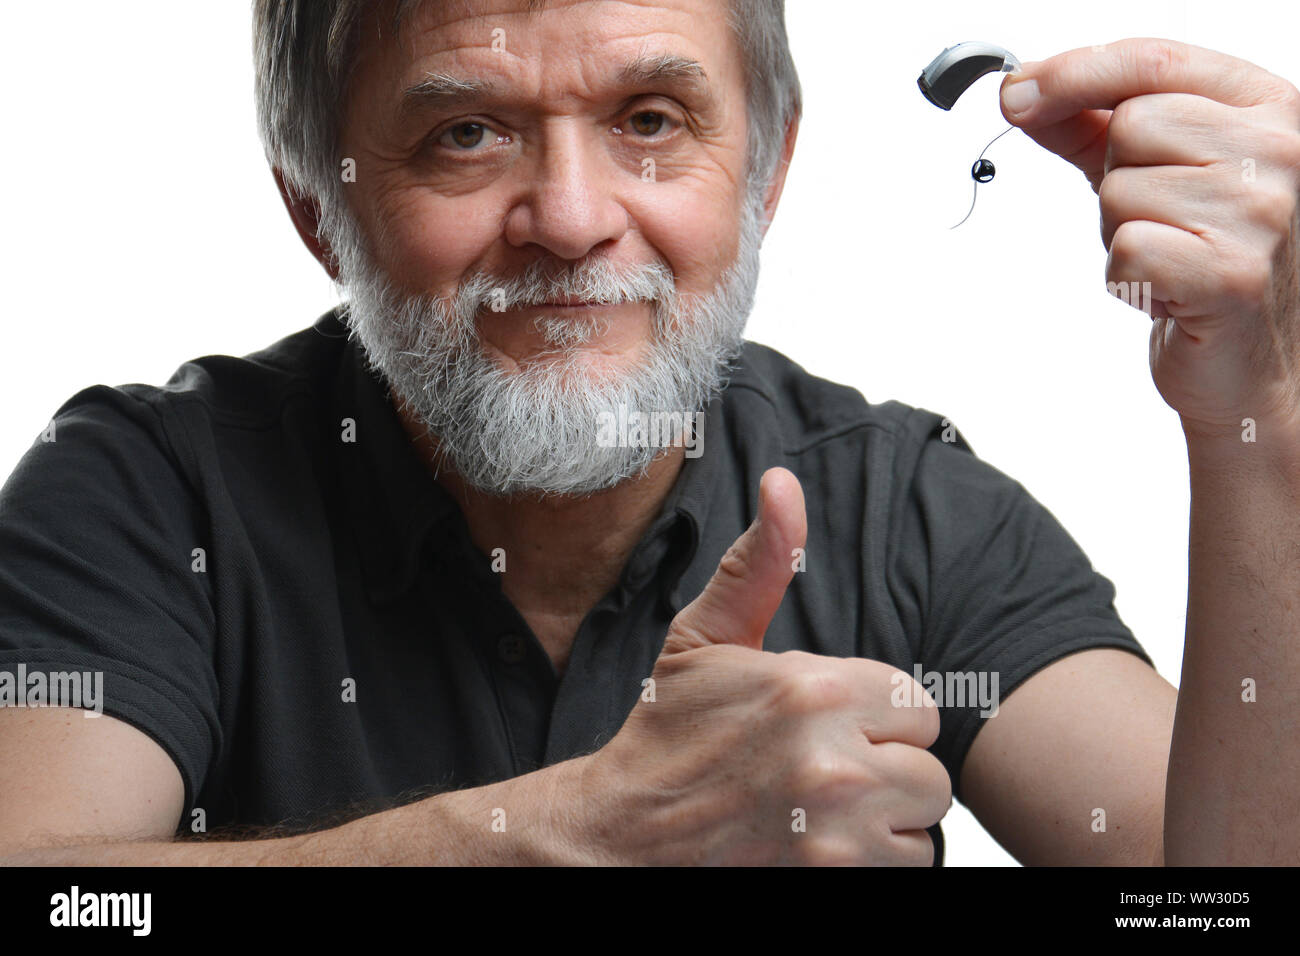 elderly man shows hearing aid Stock Photo